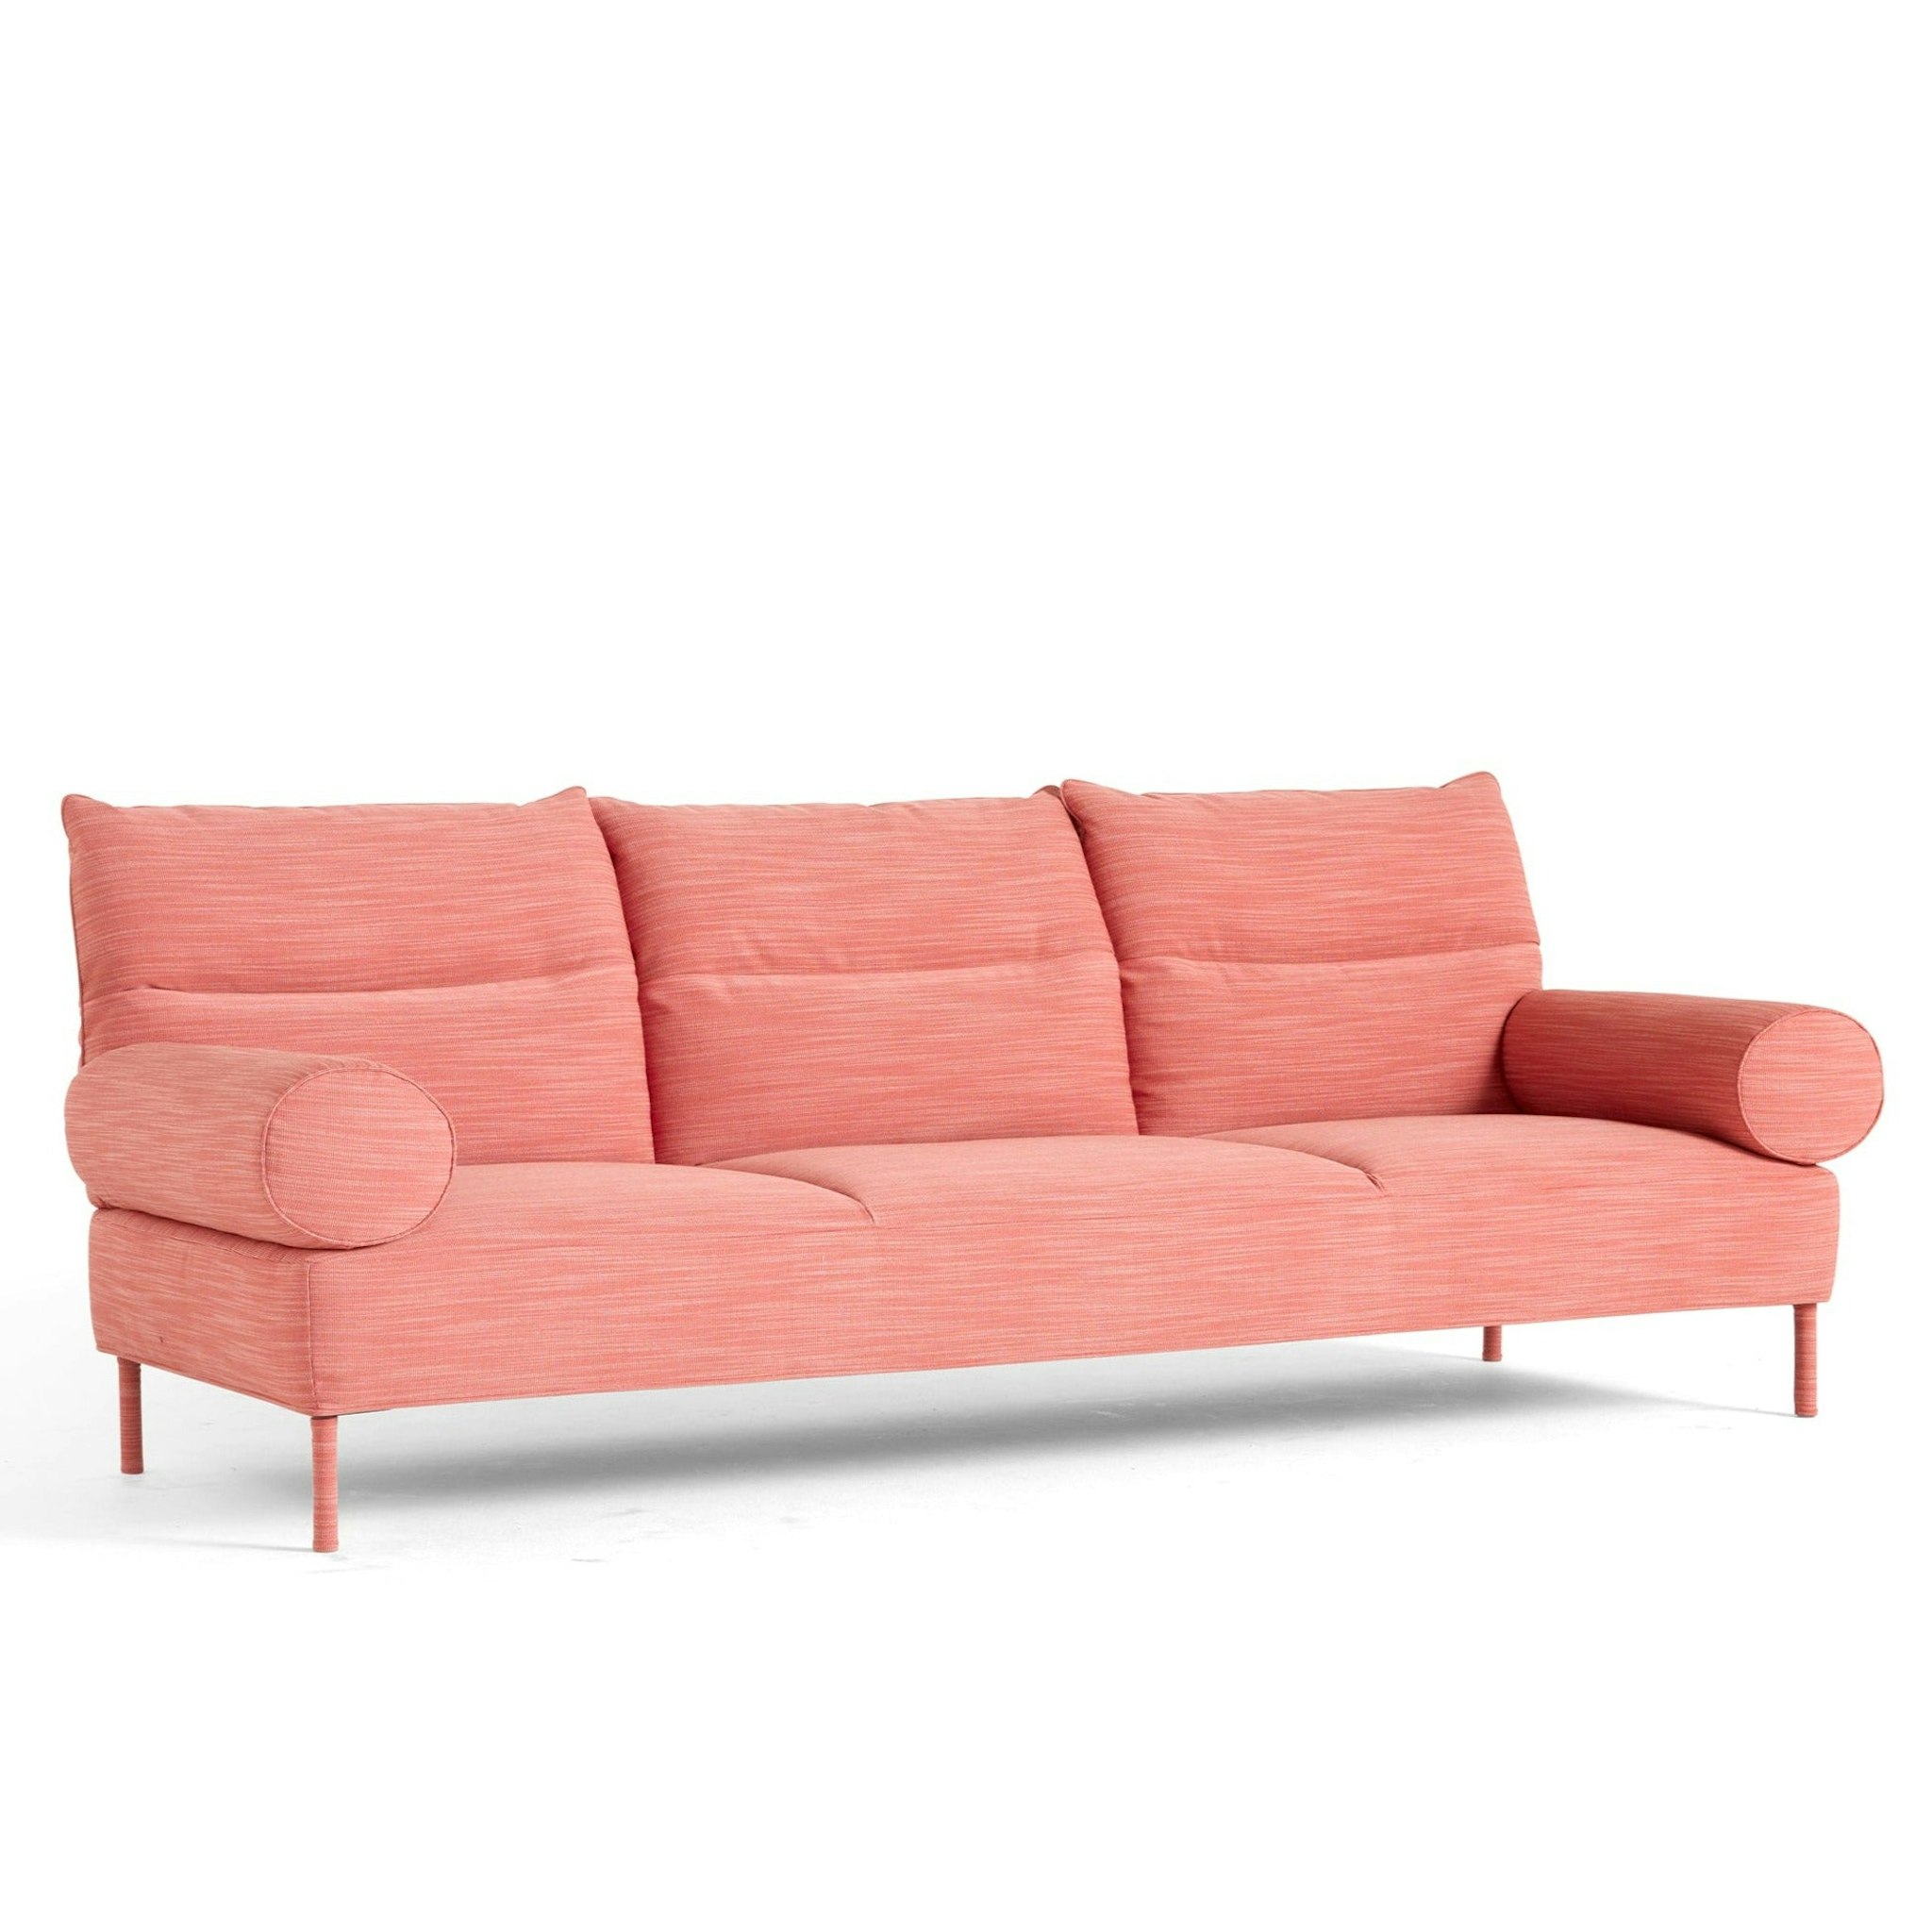 Pandarine Sofa by Inga Sempé for Hay